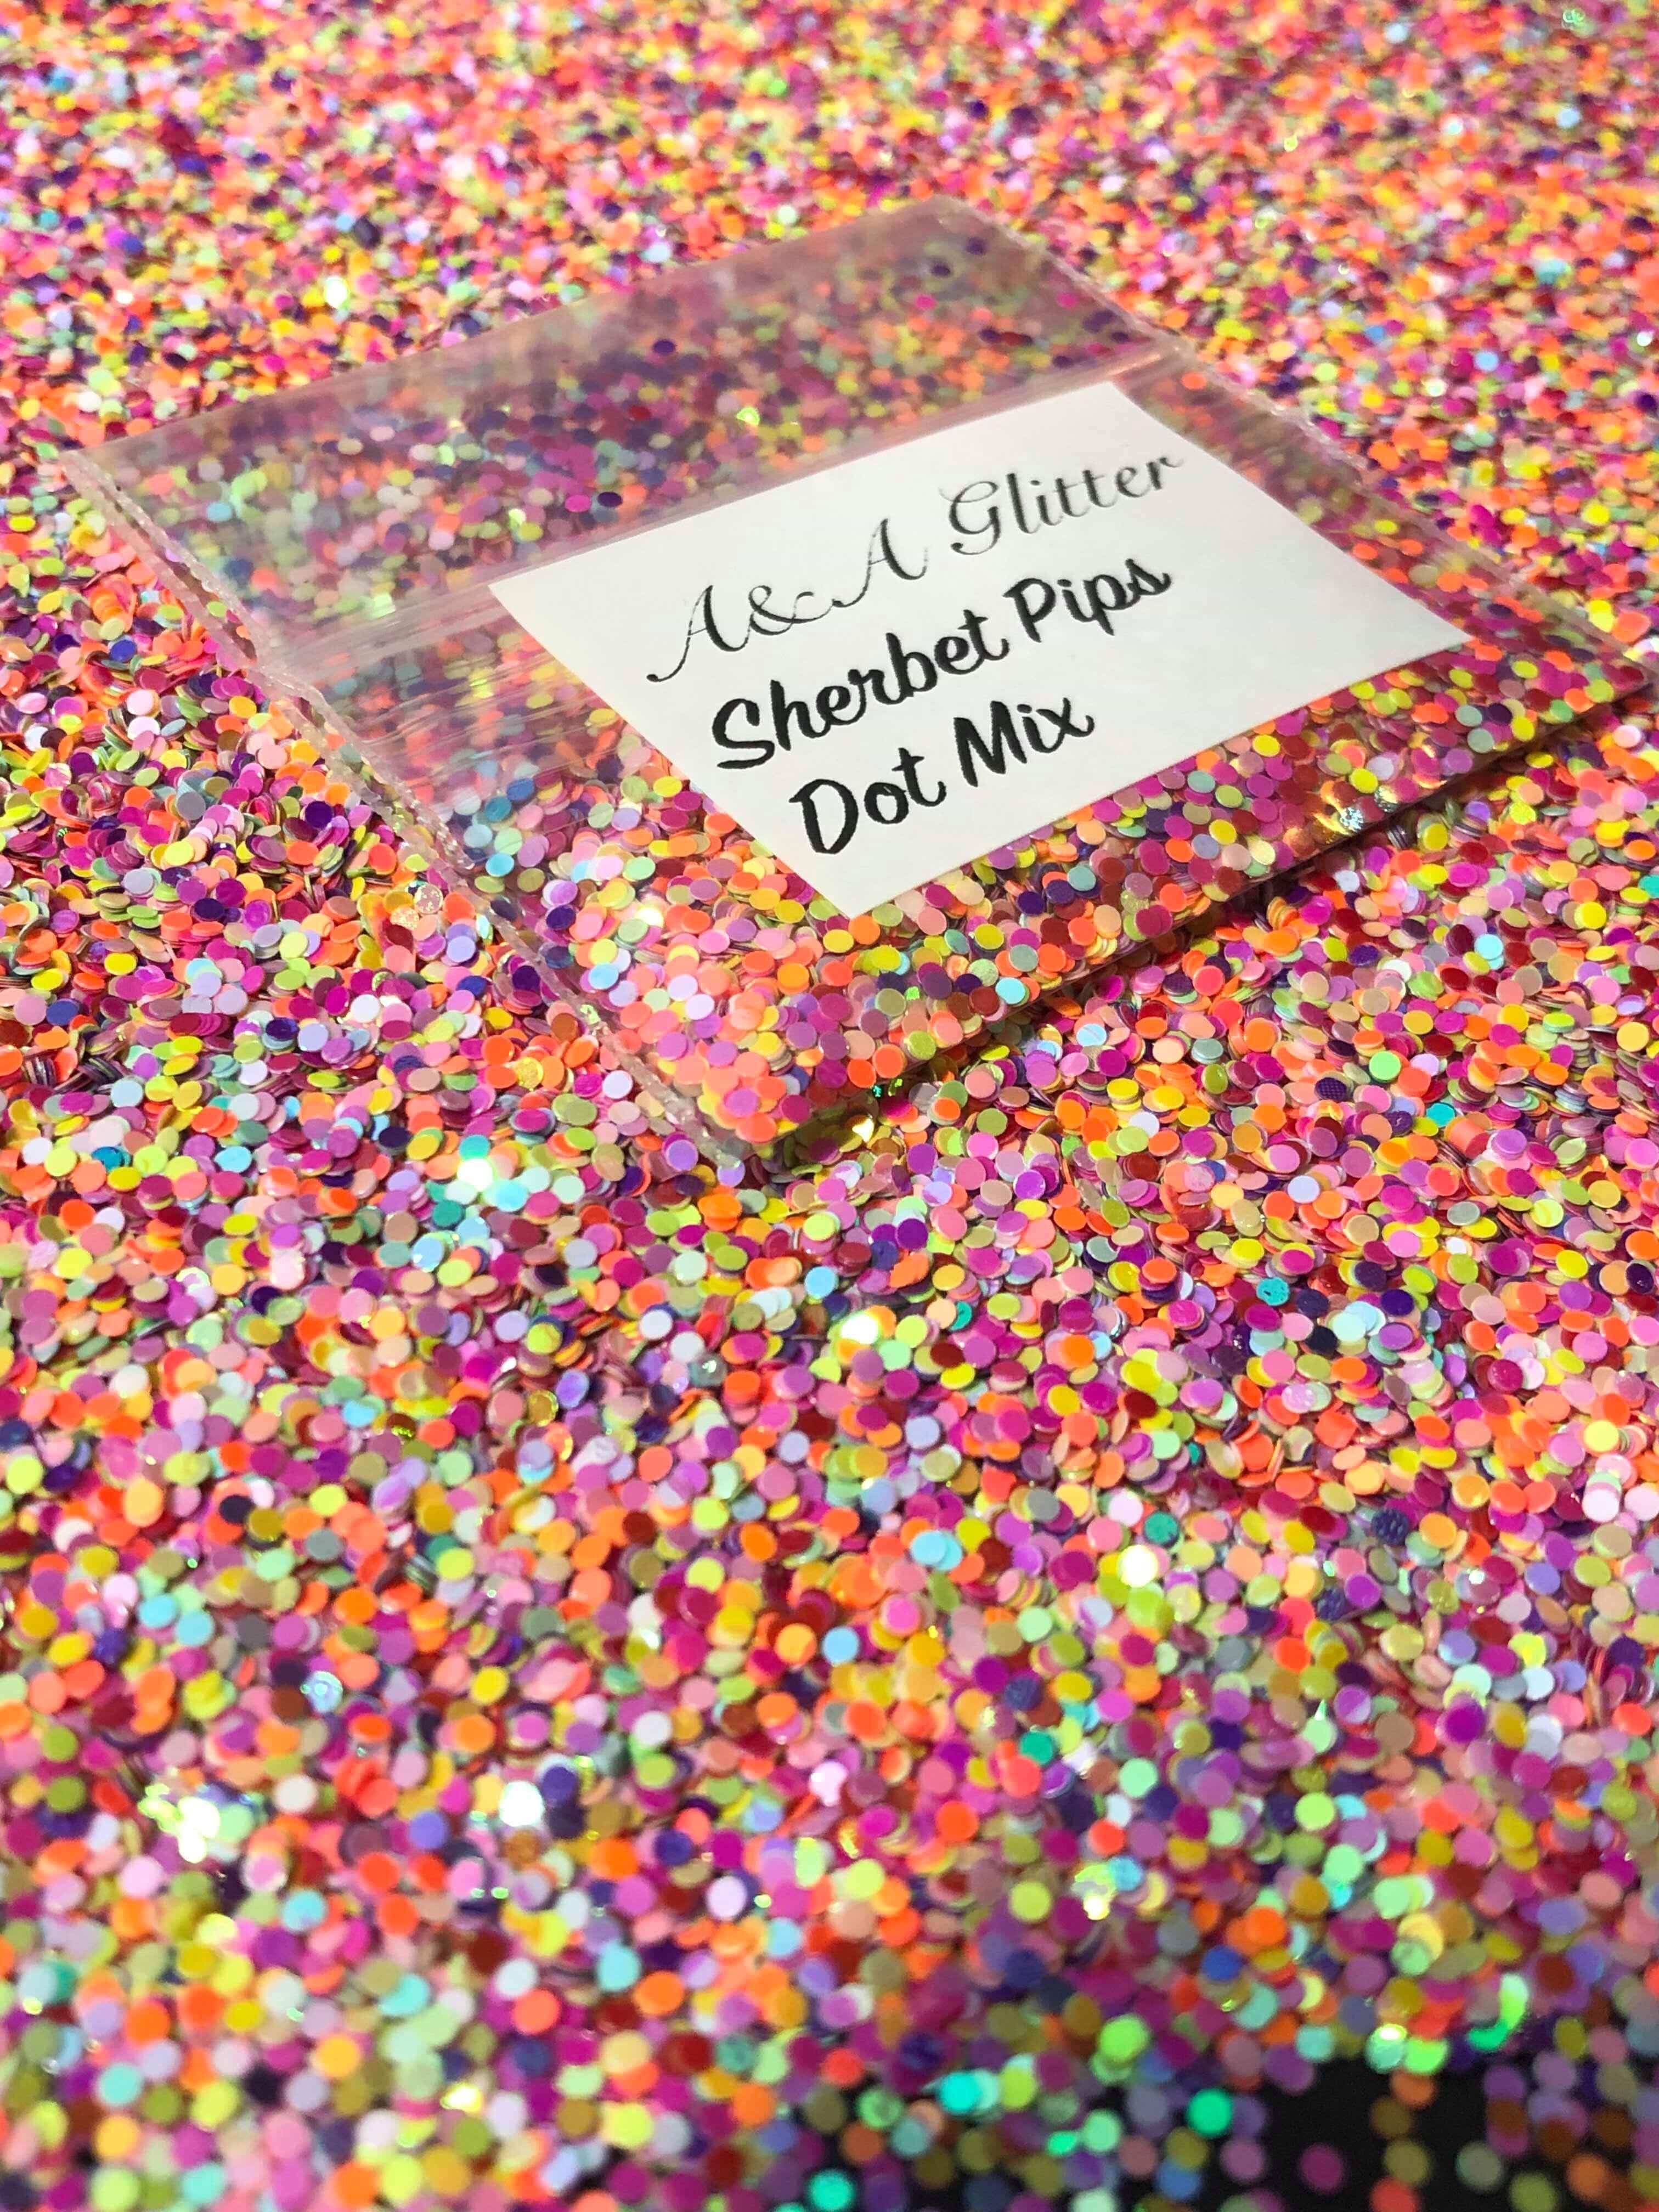 Sherbet Pips Dot Mix - A&A Glitter